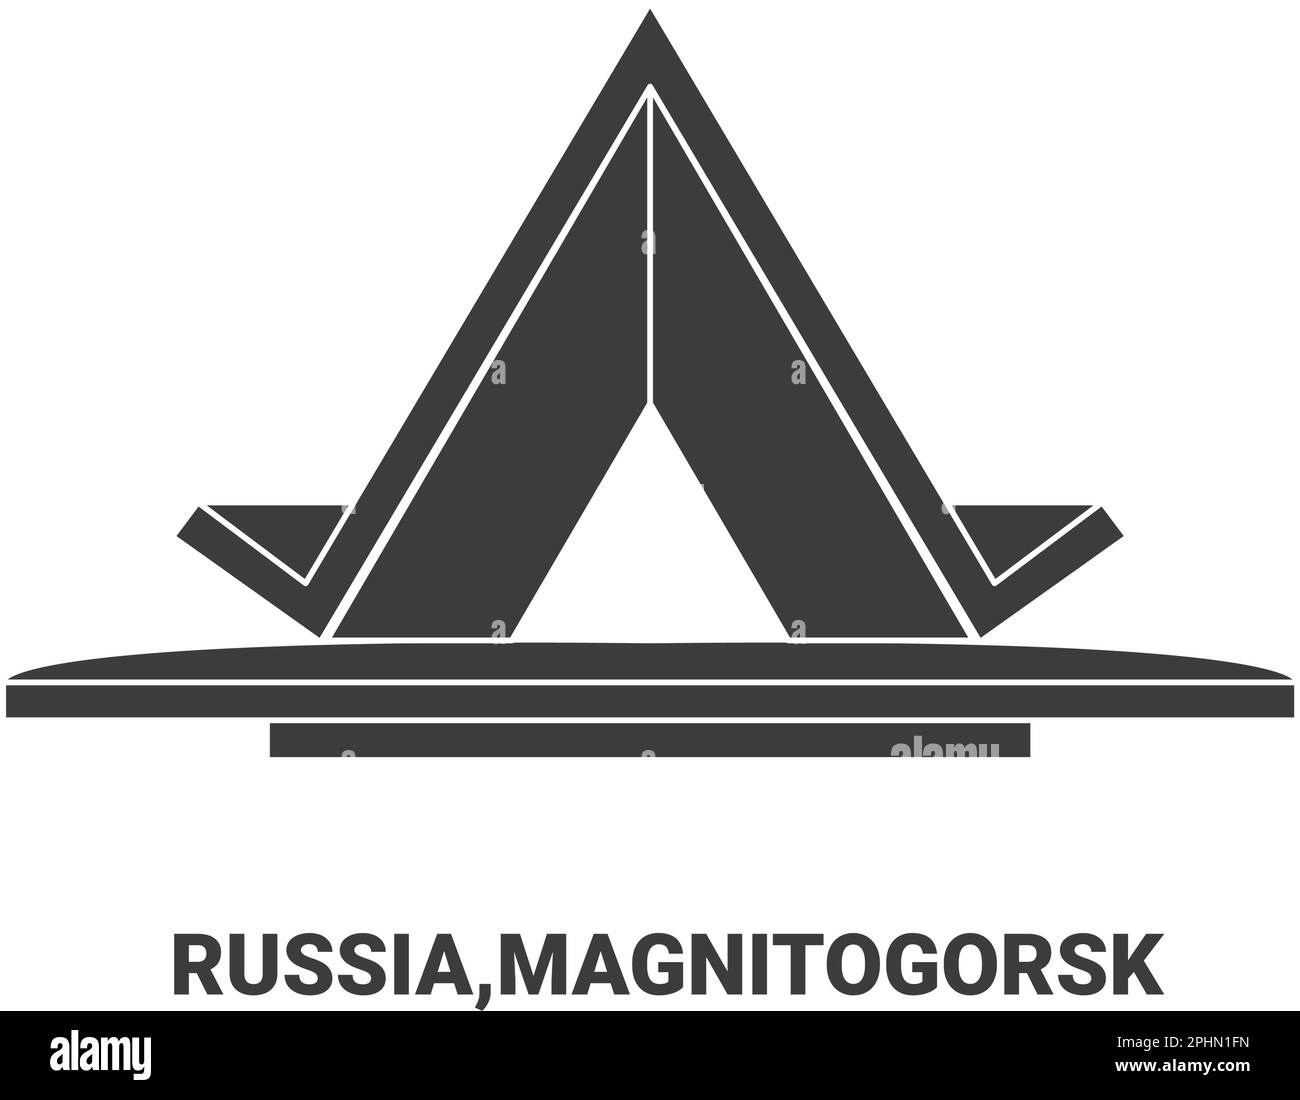 Russia,Magnitogorsk, travel landmark vector illustration Stock Vector